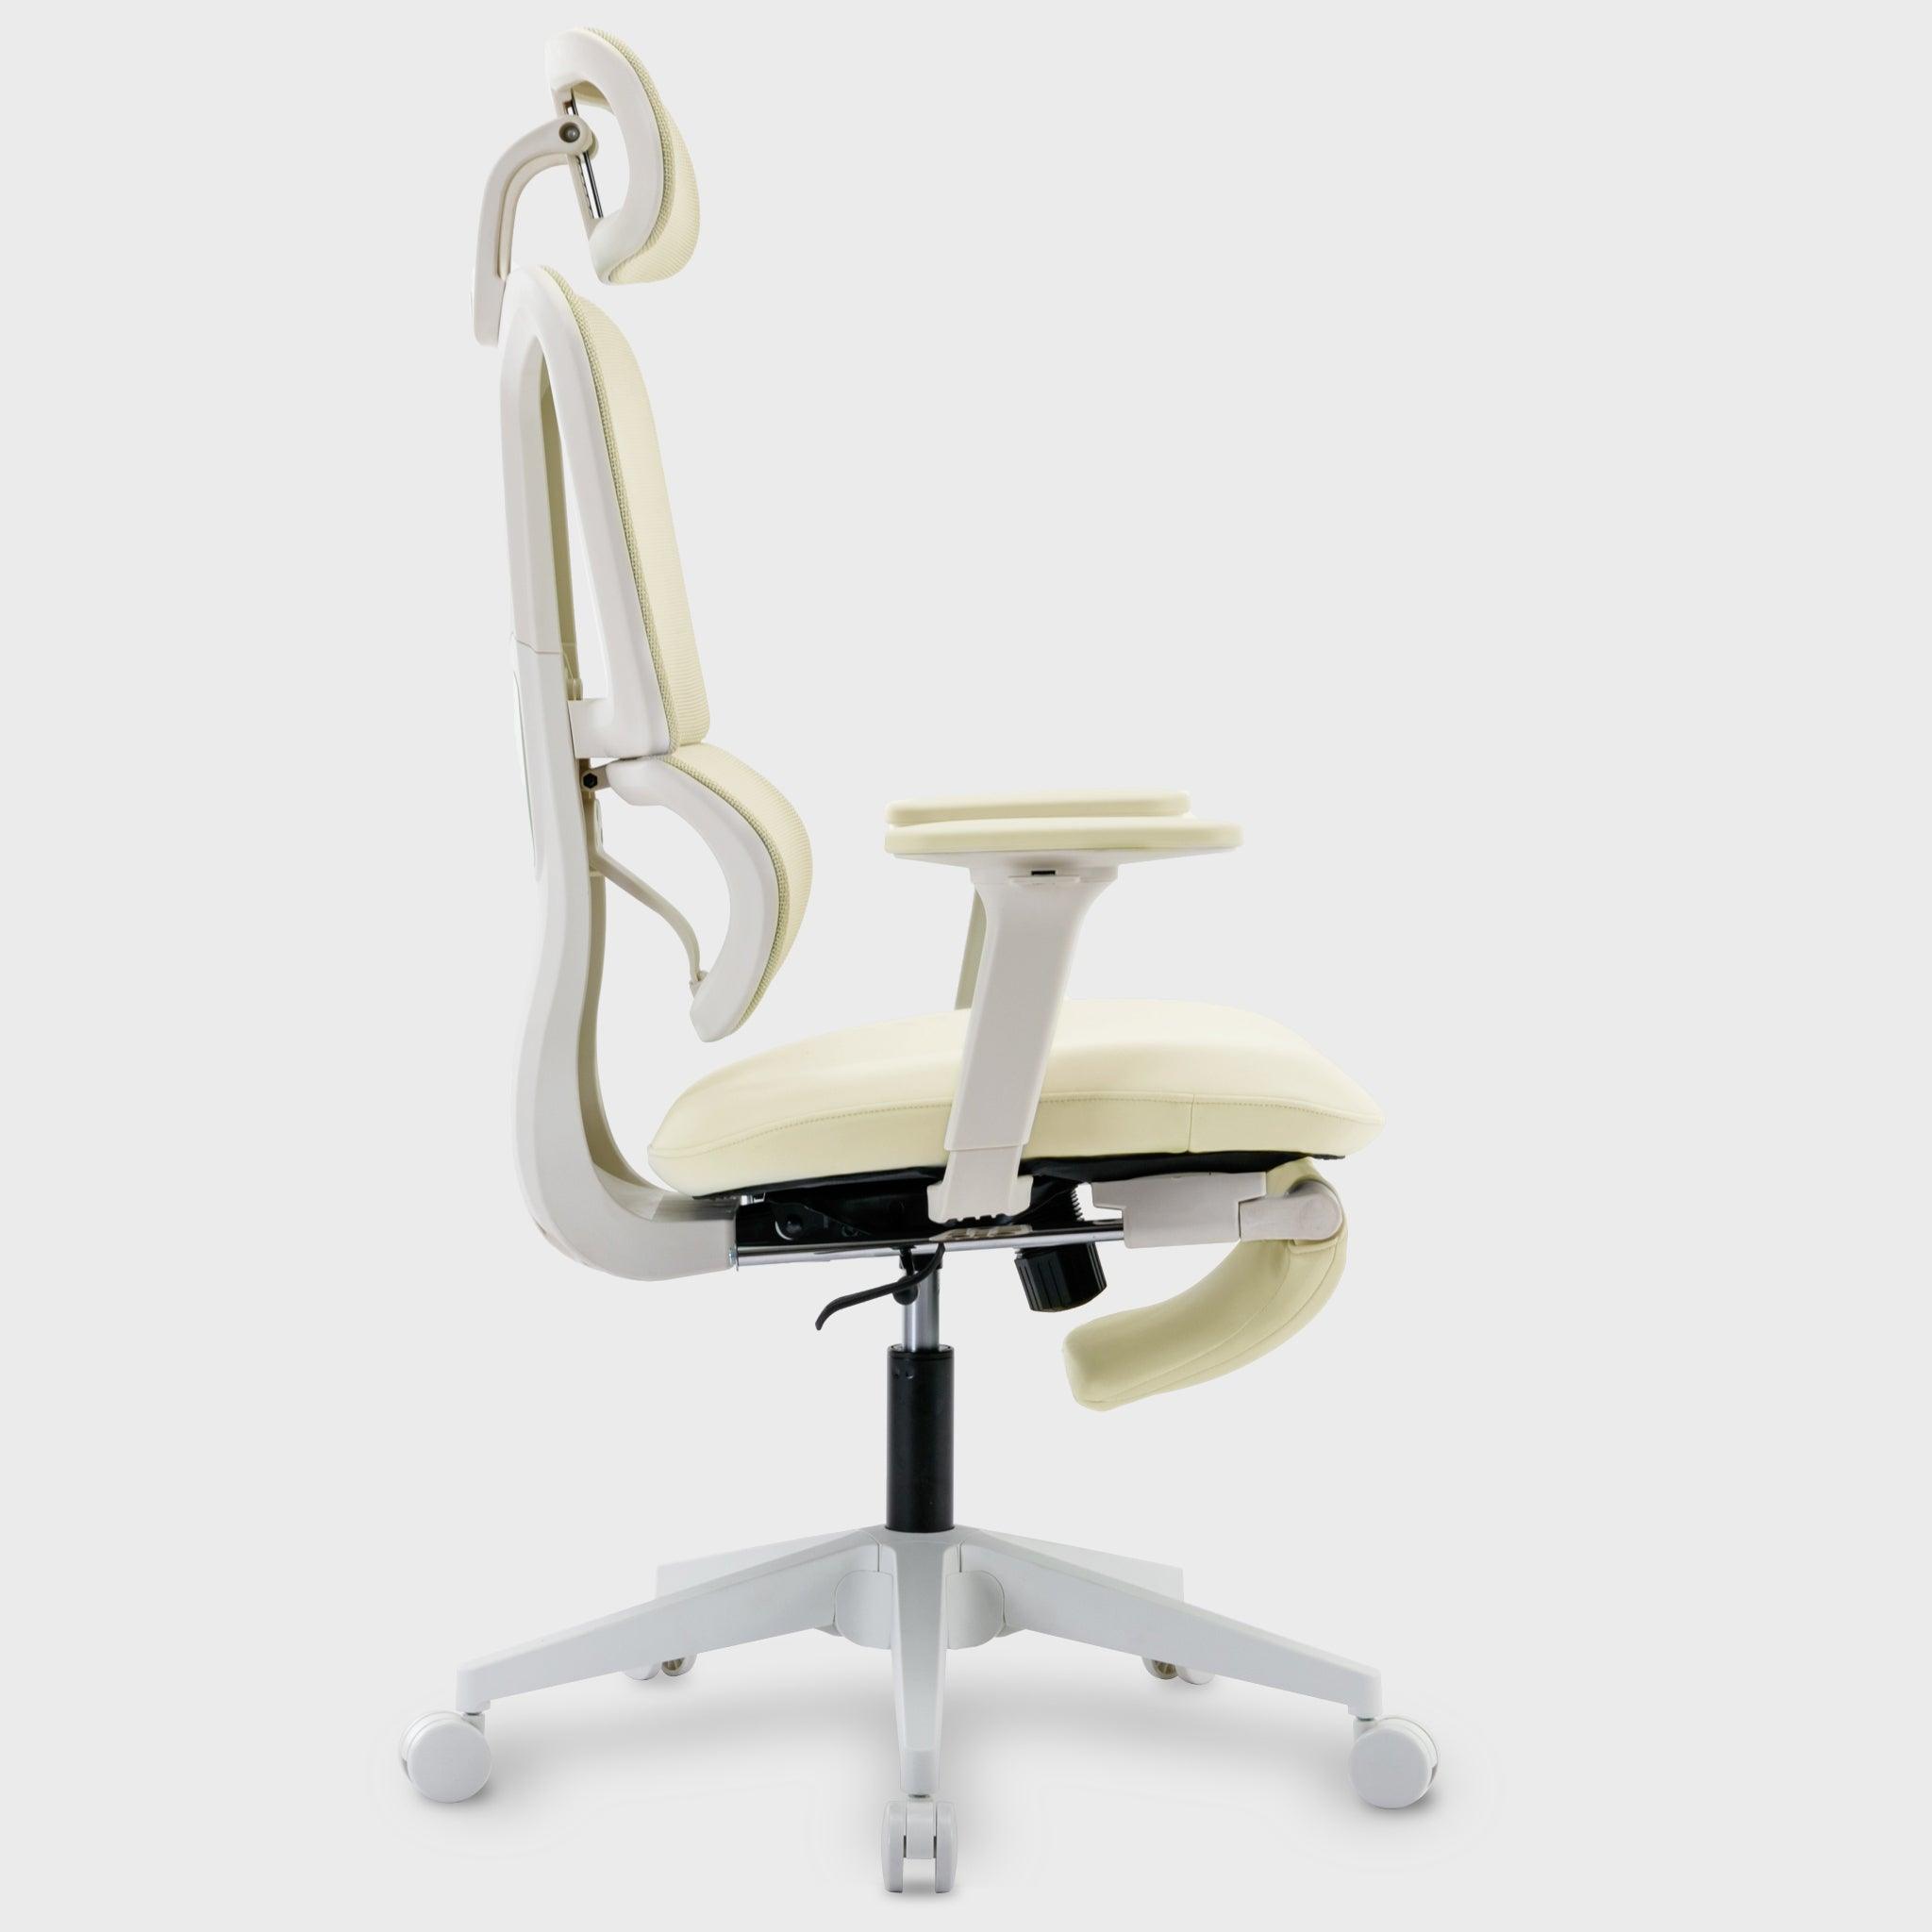 Ergonomic Office Chair Pro 3116 - Honsit Chair